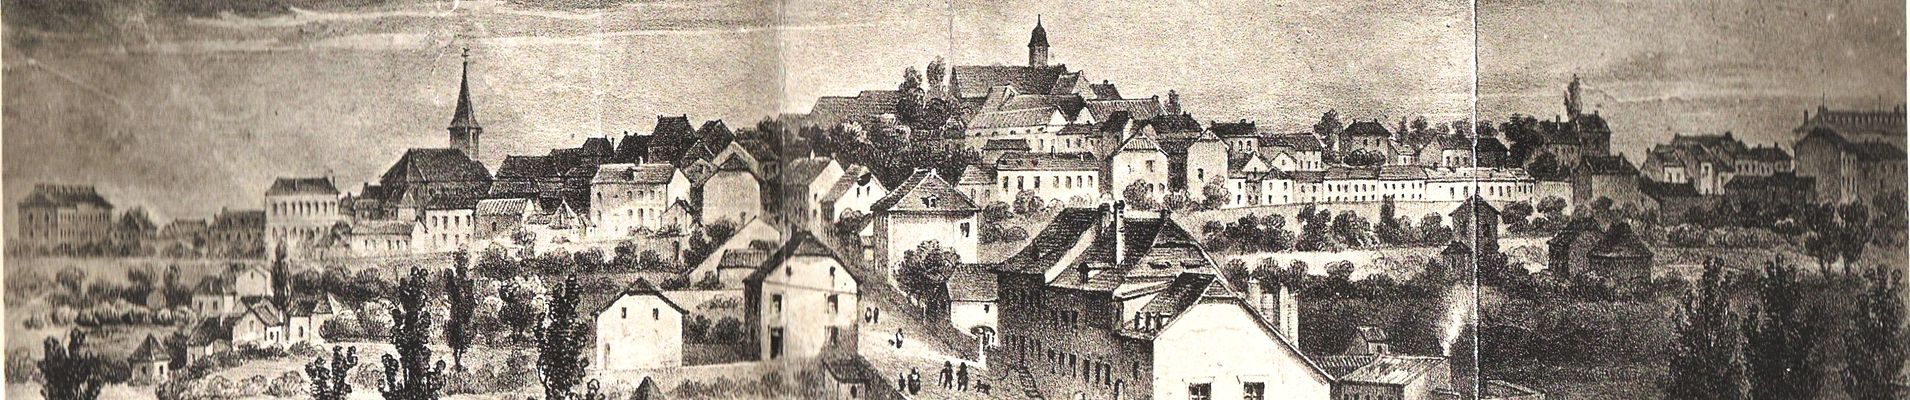 Arlon en 1850.jpg